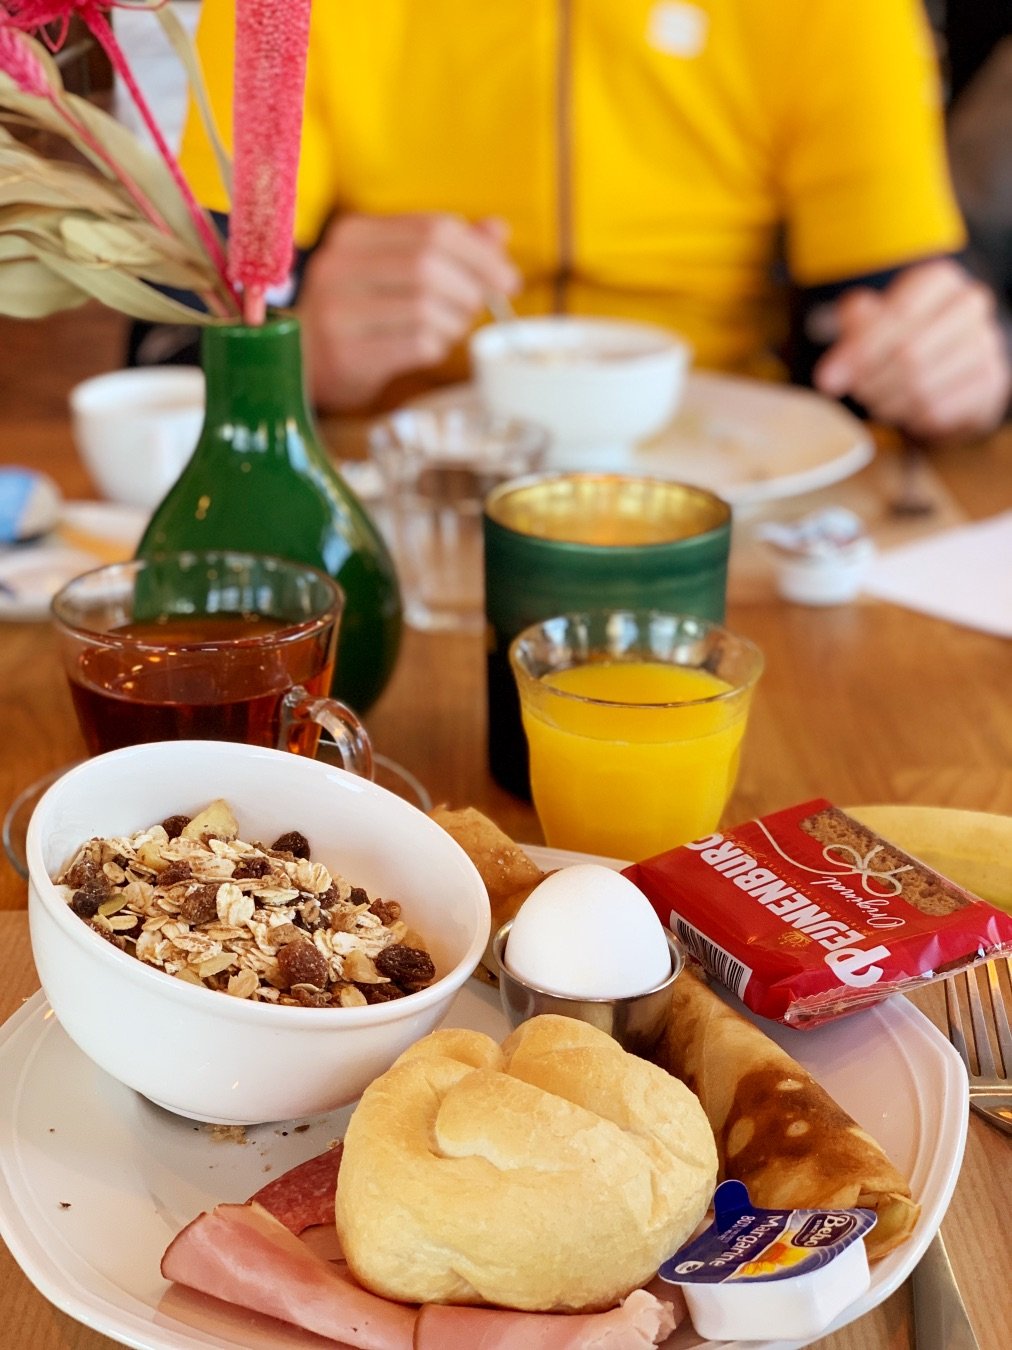 Vers ontbijt met muesli jus d'orange, kaiserbroodje, ham, Peijnenburg, koffie.